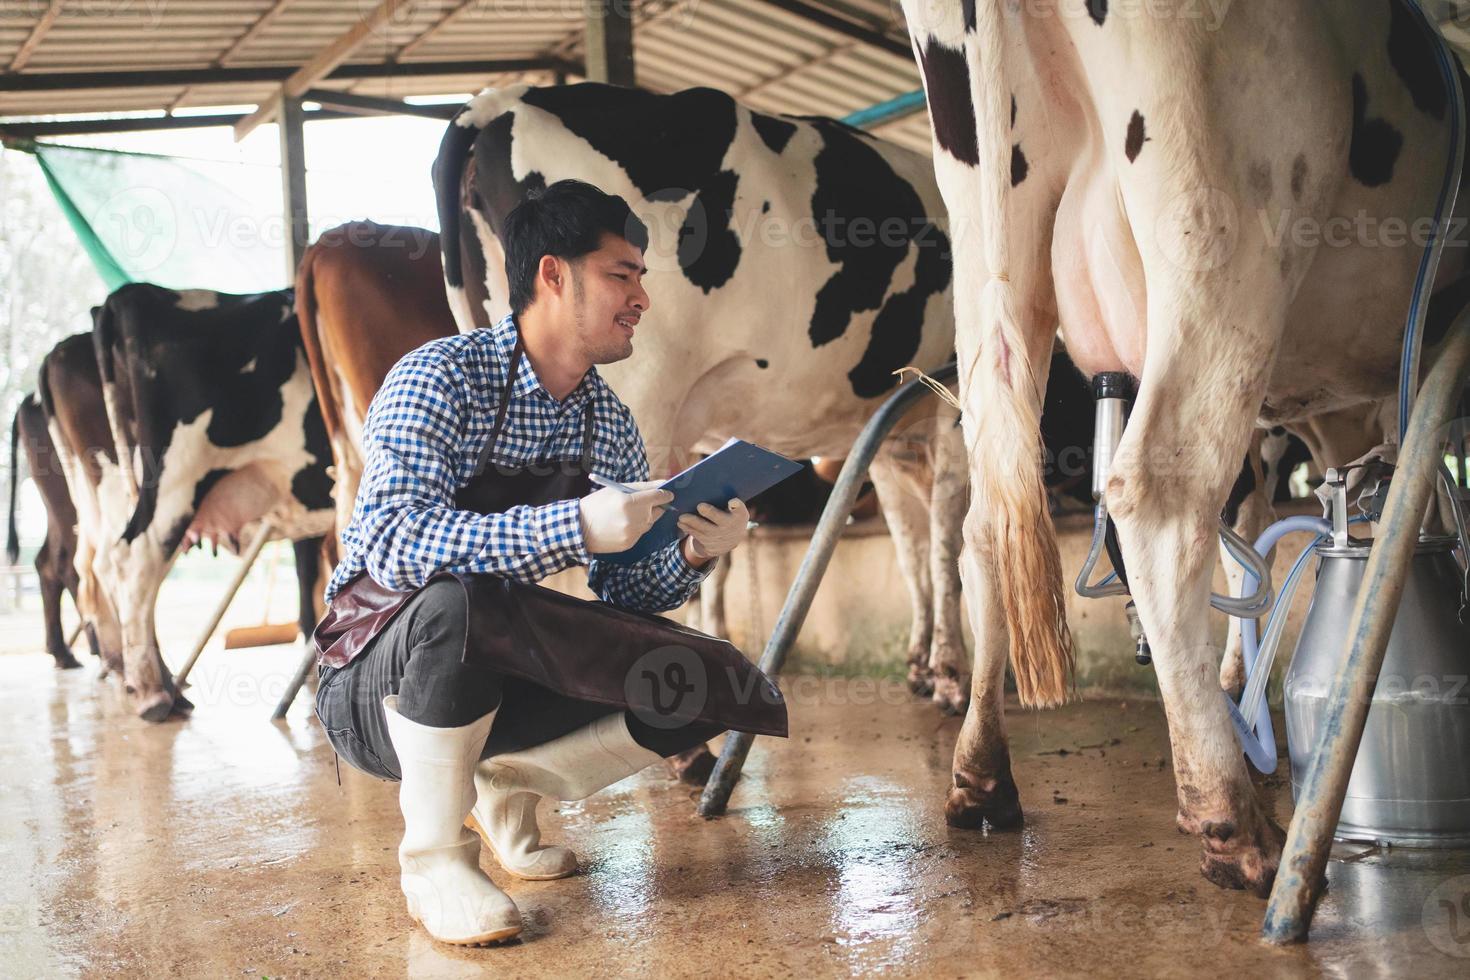 agricultor masculino verificando seu gado e a qualidade do leite na indústria de laticínios .agriculture, agricultura e pecuária conceito, vaca na fazenda de gado leiteiro comendo feno, estábulo. foto